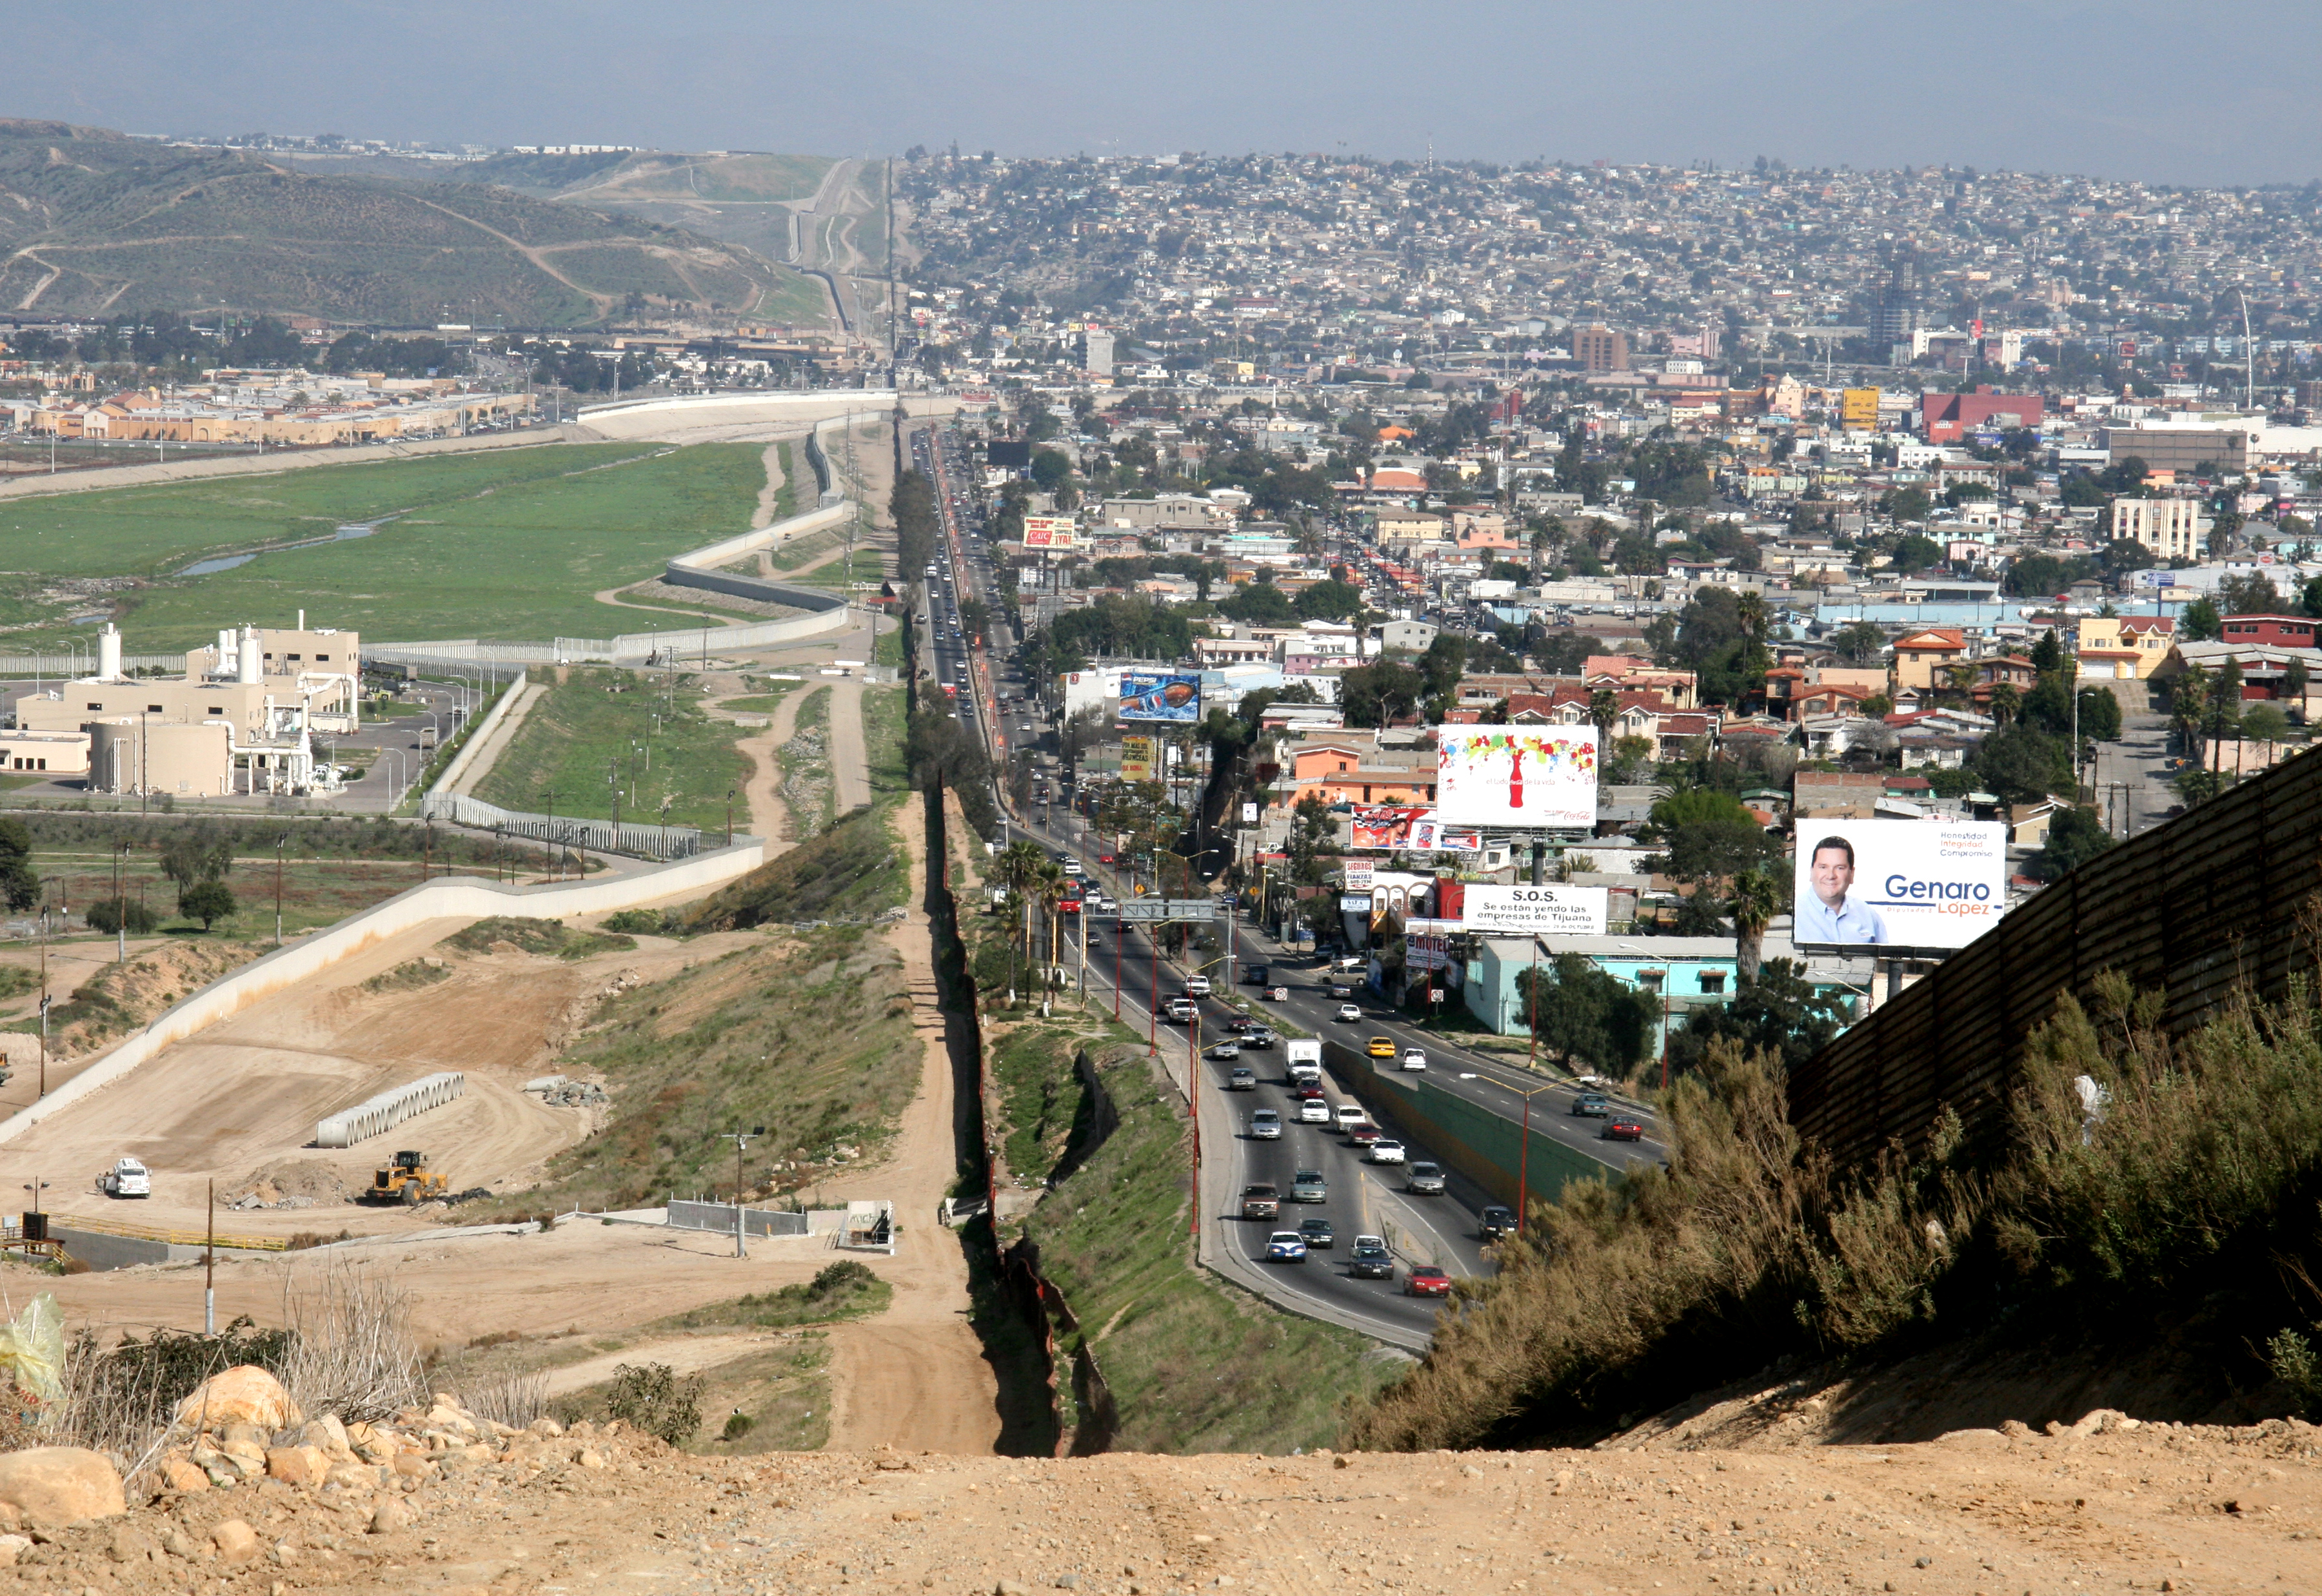 Border fence between San Diego, California (left) and Tijuana, Mexico (right), 2007.